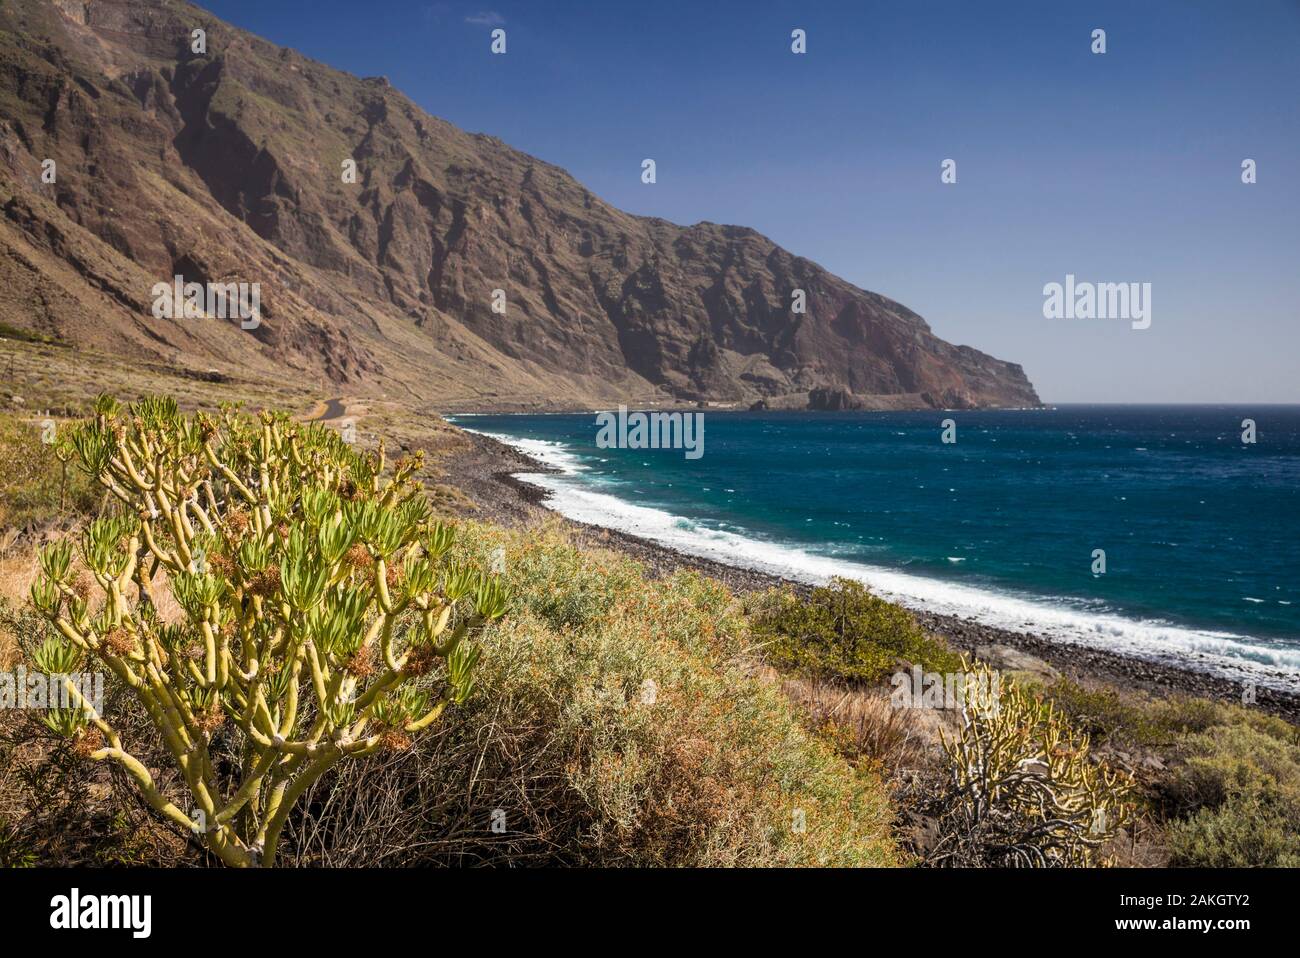 Spagna Isole Canarie El Hierro Island, east coast, vista da HI 2 autostrada Foto Stock